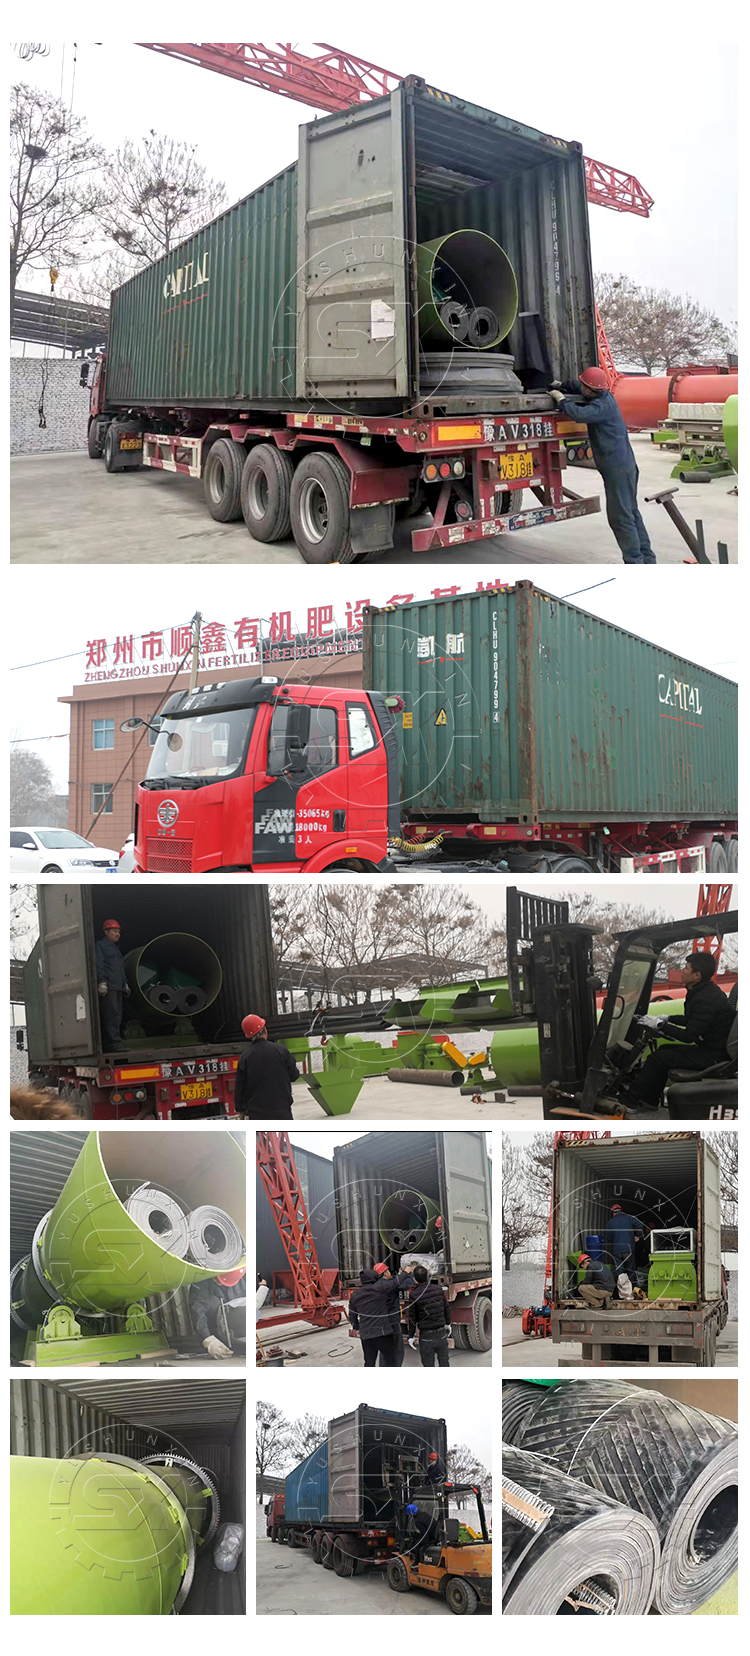 Shipment to Uzbekistan